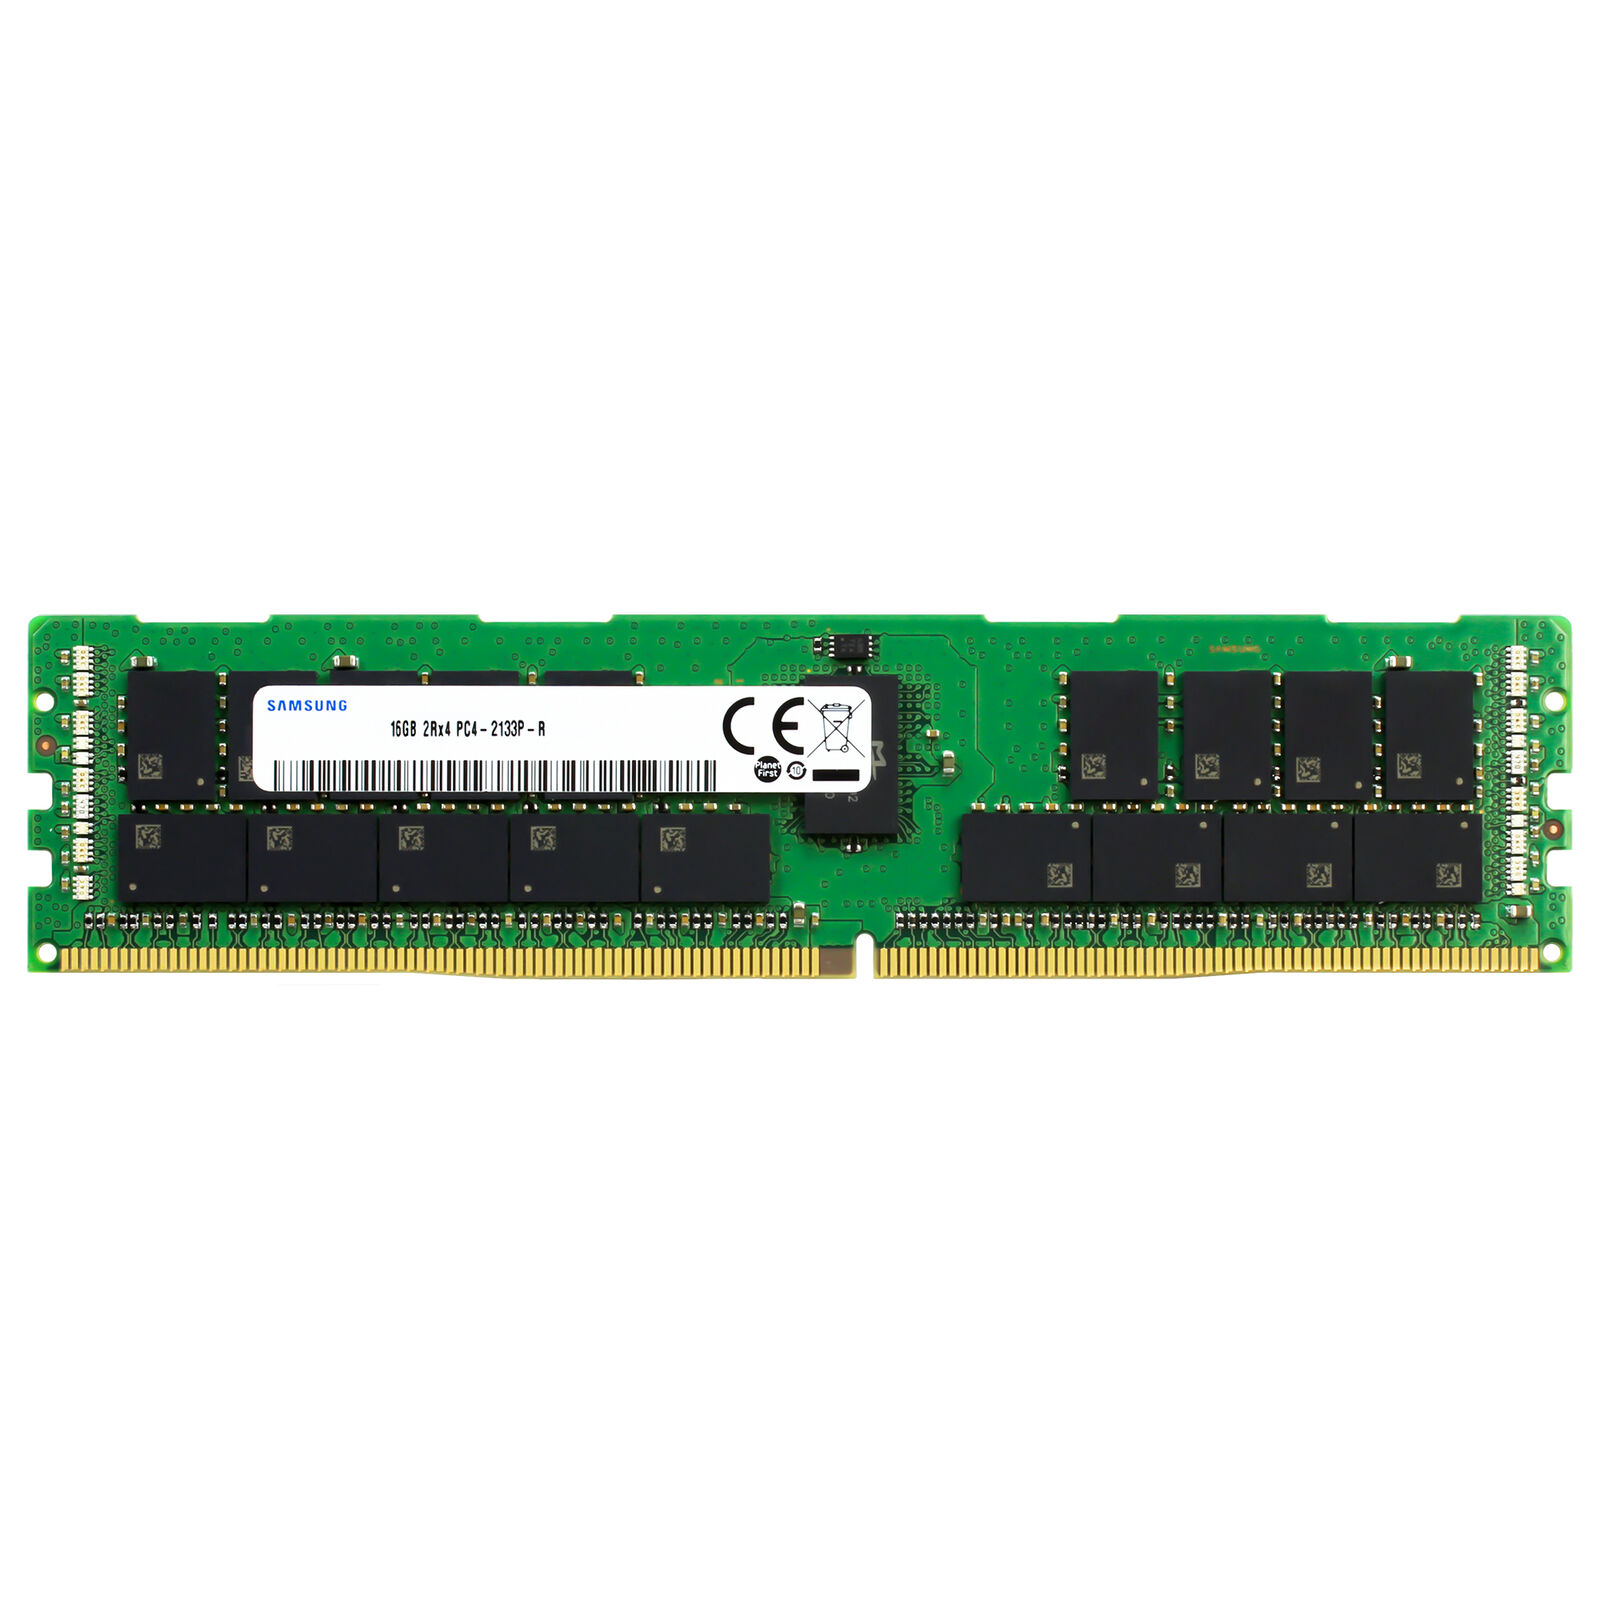 Samsung 16GB 2Rx4 PC4-2133 RDIMM DDR4-17000 ECC REG Registered Server Memory RAM